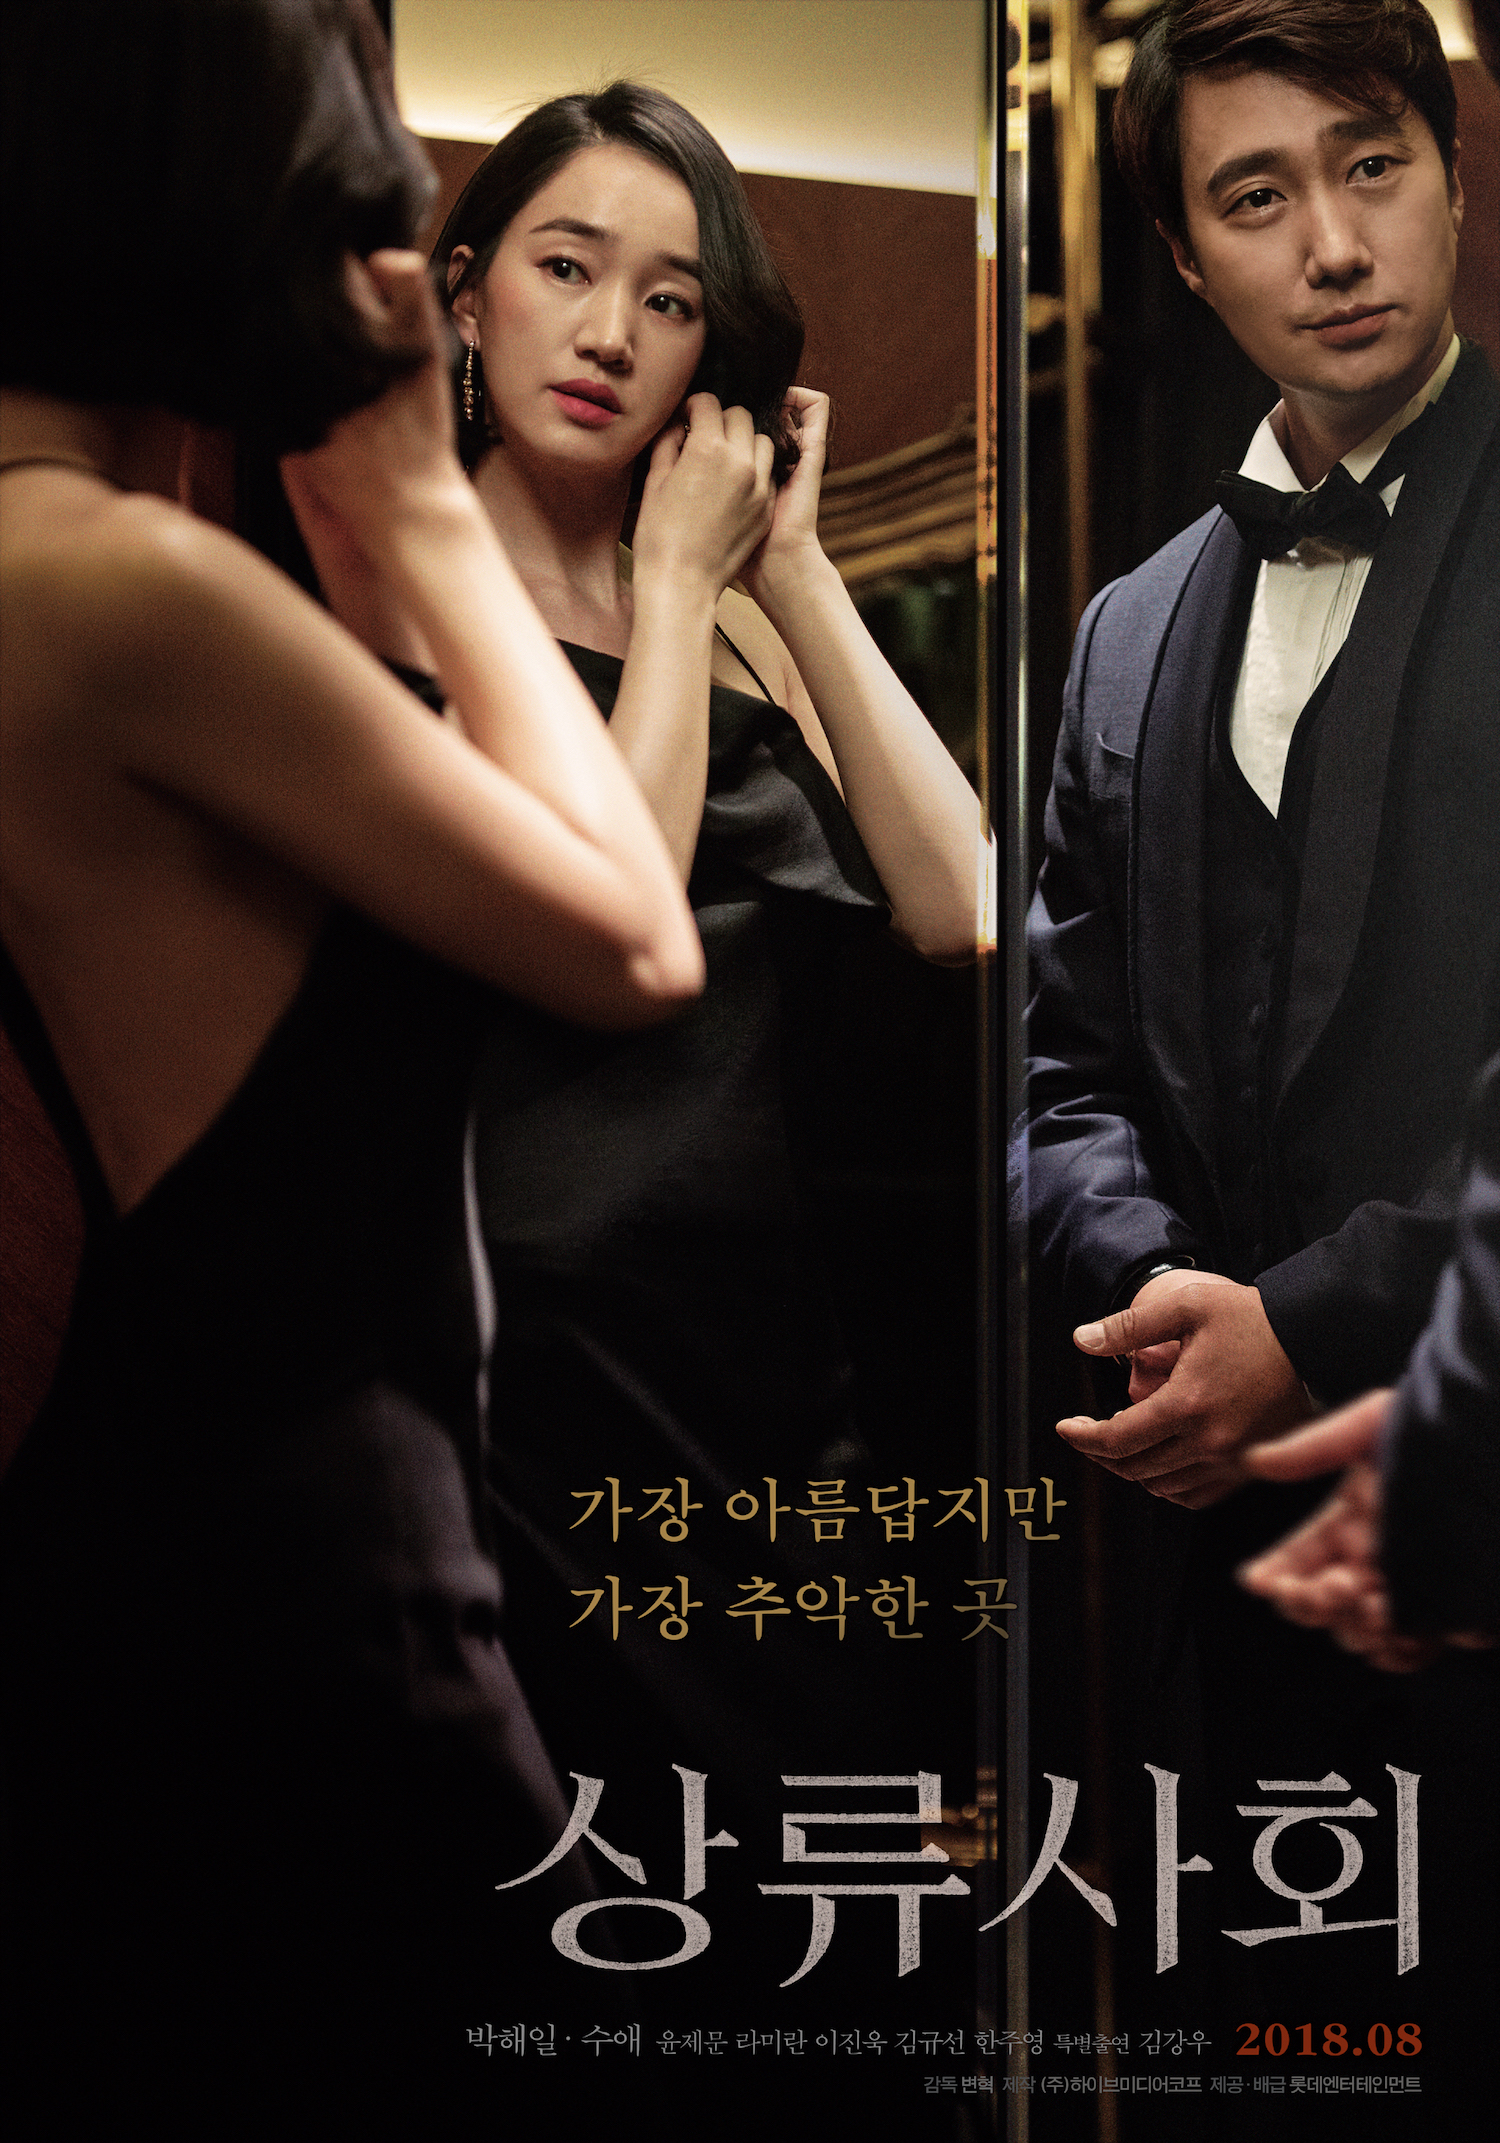 Film semi korea di netflix 2021